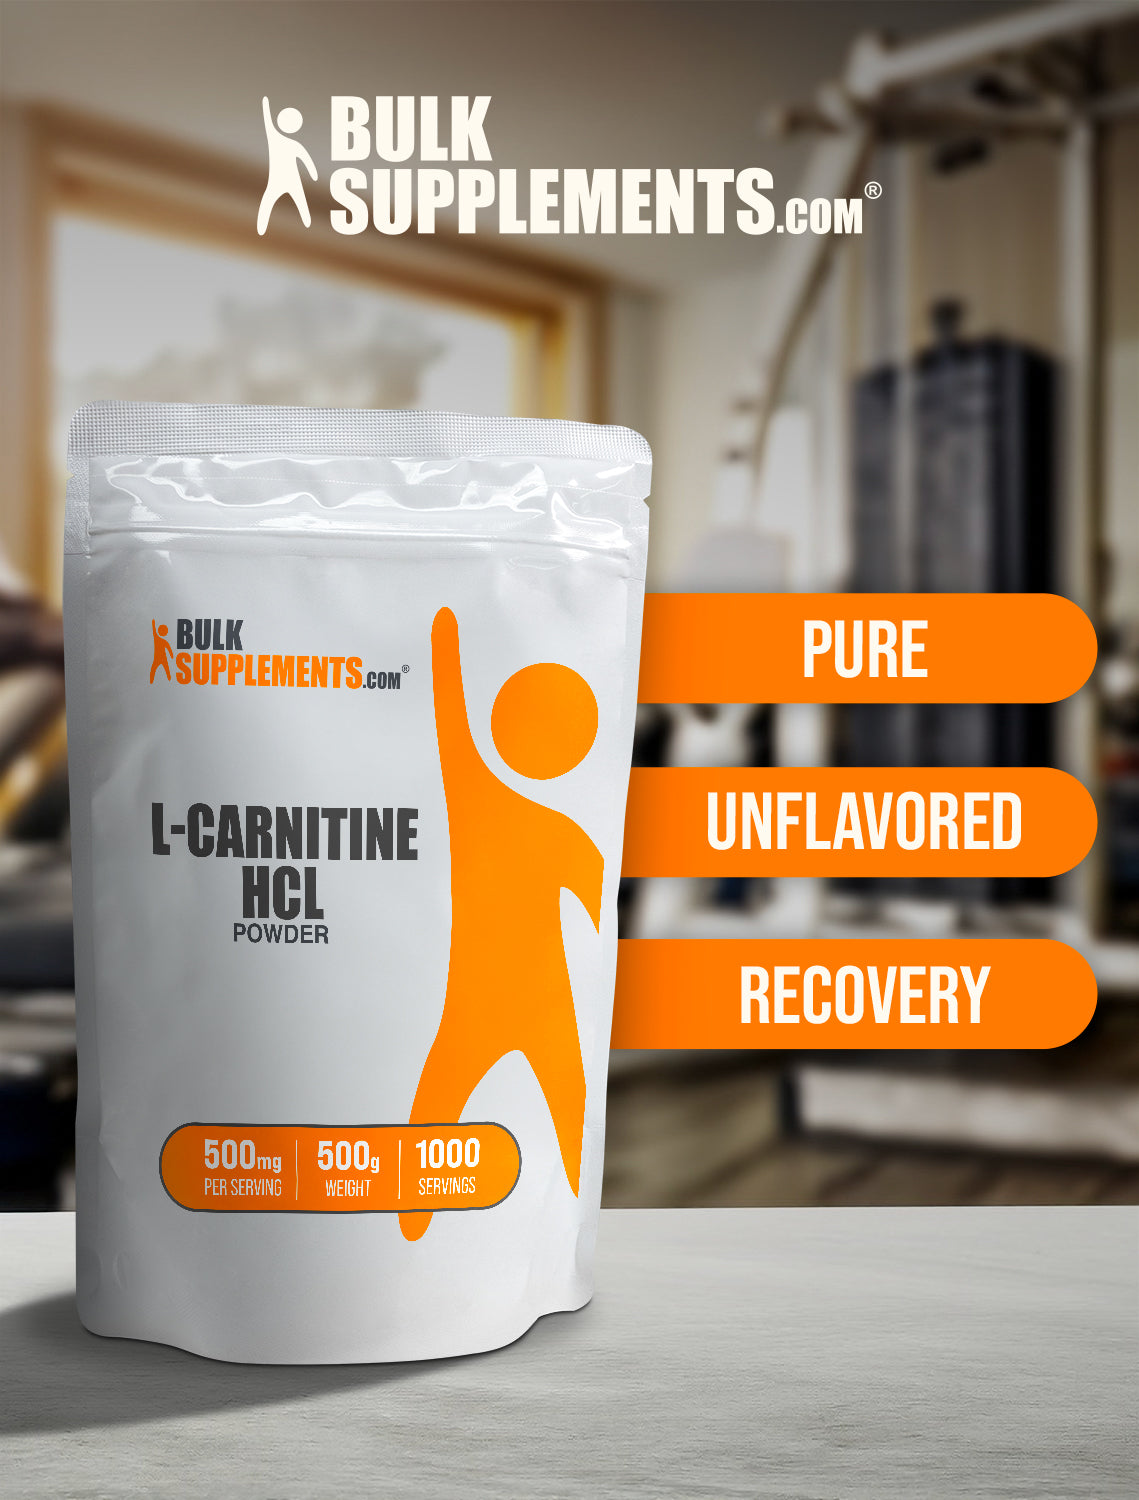 L-Carnitine HCl powder keyword image 500g